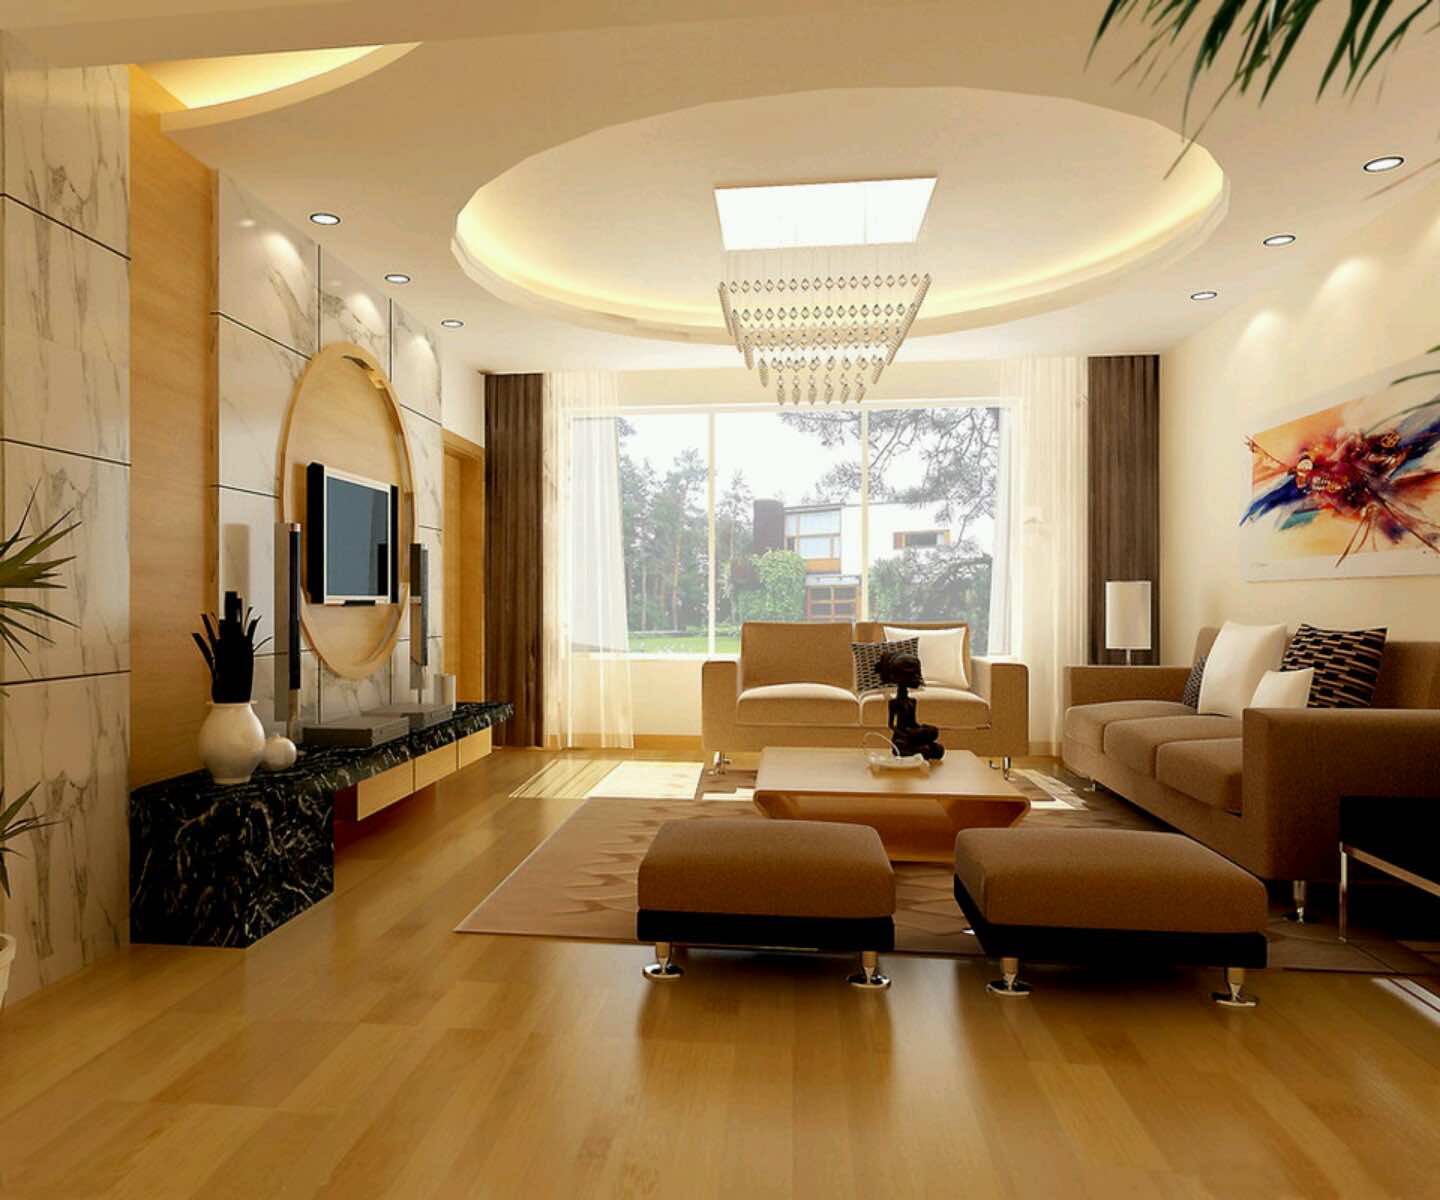 living room roof ceiling design